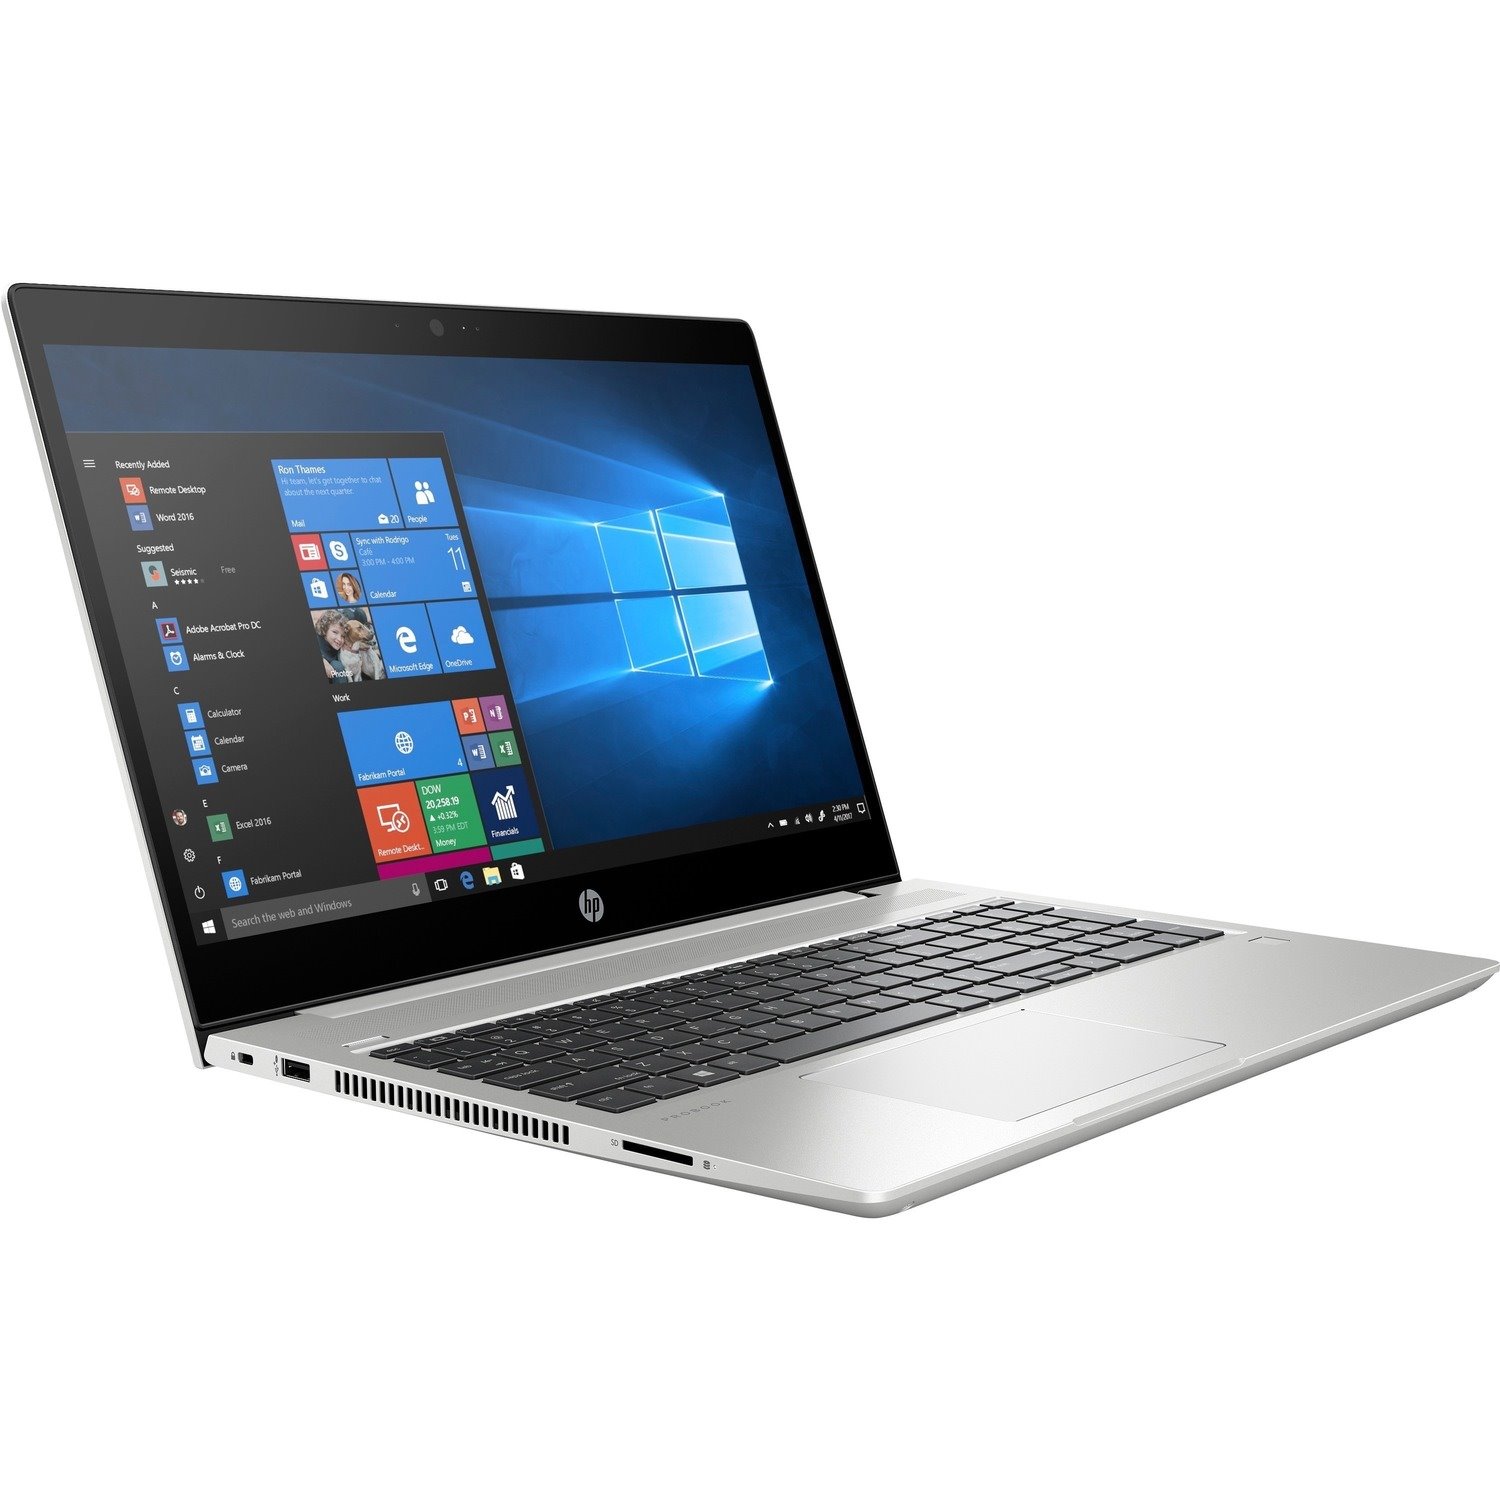 HP probook 450 G7 Laptop, Silver, Intel Core i5-10210U, 8 Gig ram, 256  GB SSD Nvme, 15.6 FHD IPS screen.